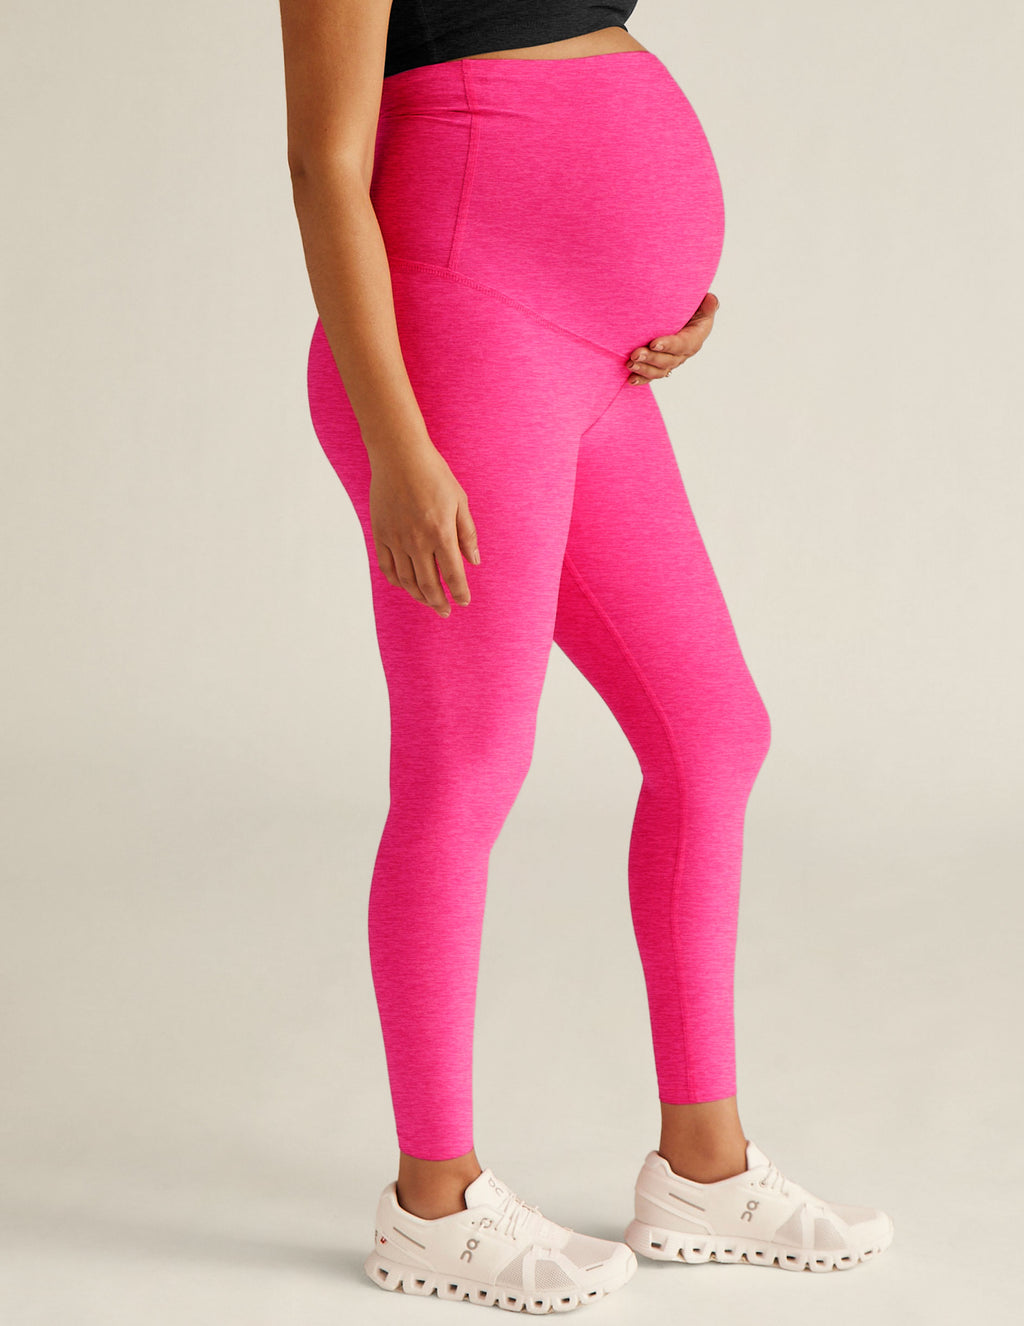 Women's Leggings Sale pink Size XL, Trousers